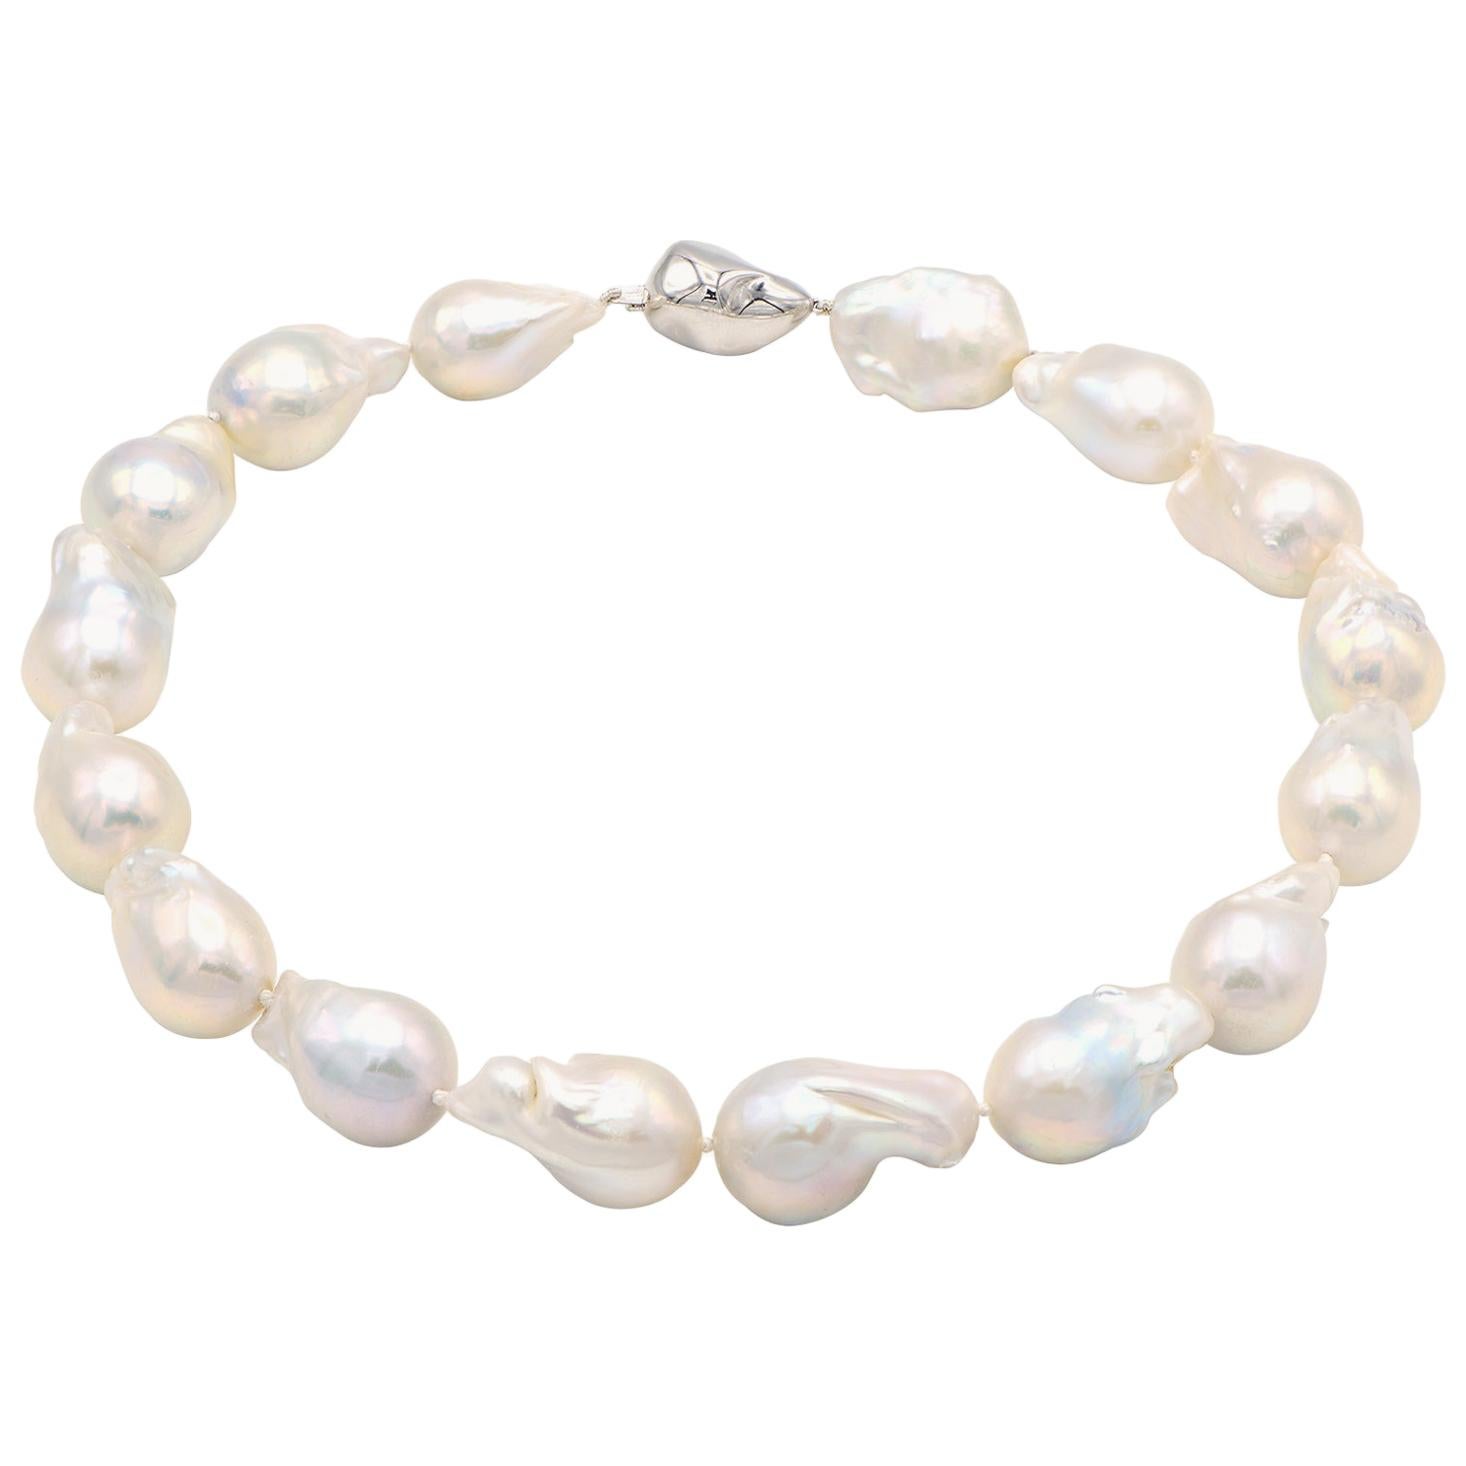 Collier baroque de perles d'eau douce blanches avec fermoir en or blanc 14 carats